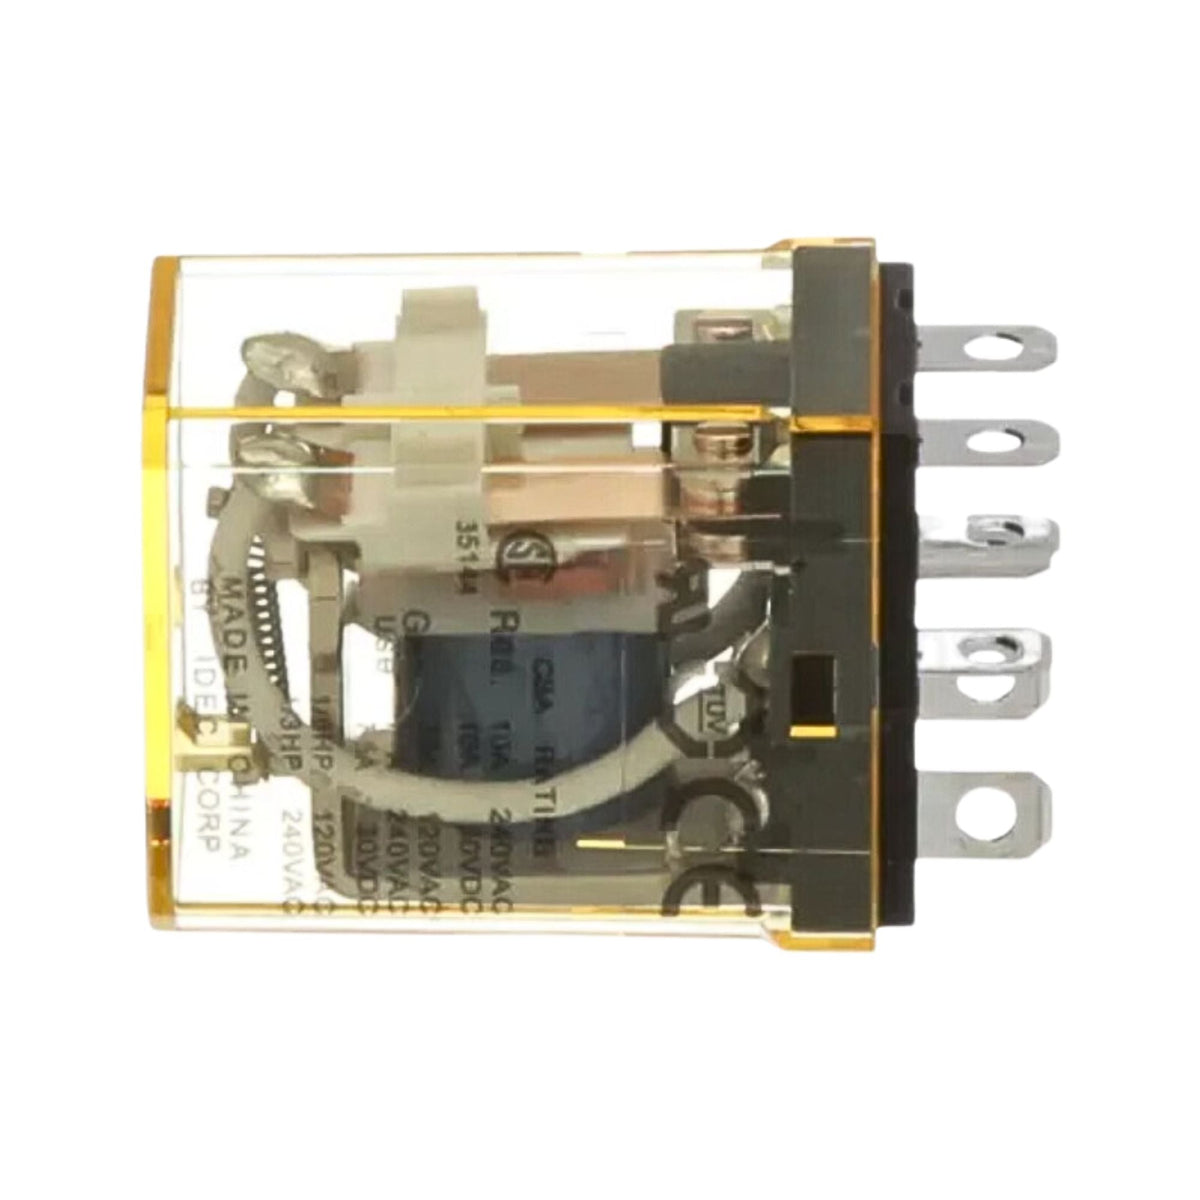 Plug-In Relay | RH2B-UAC110-120V used on Idec product line - side view